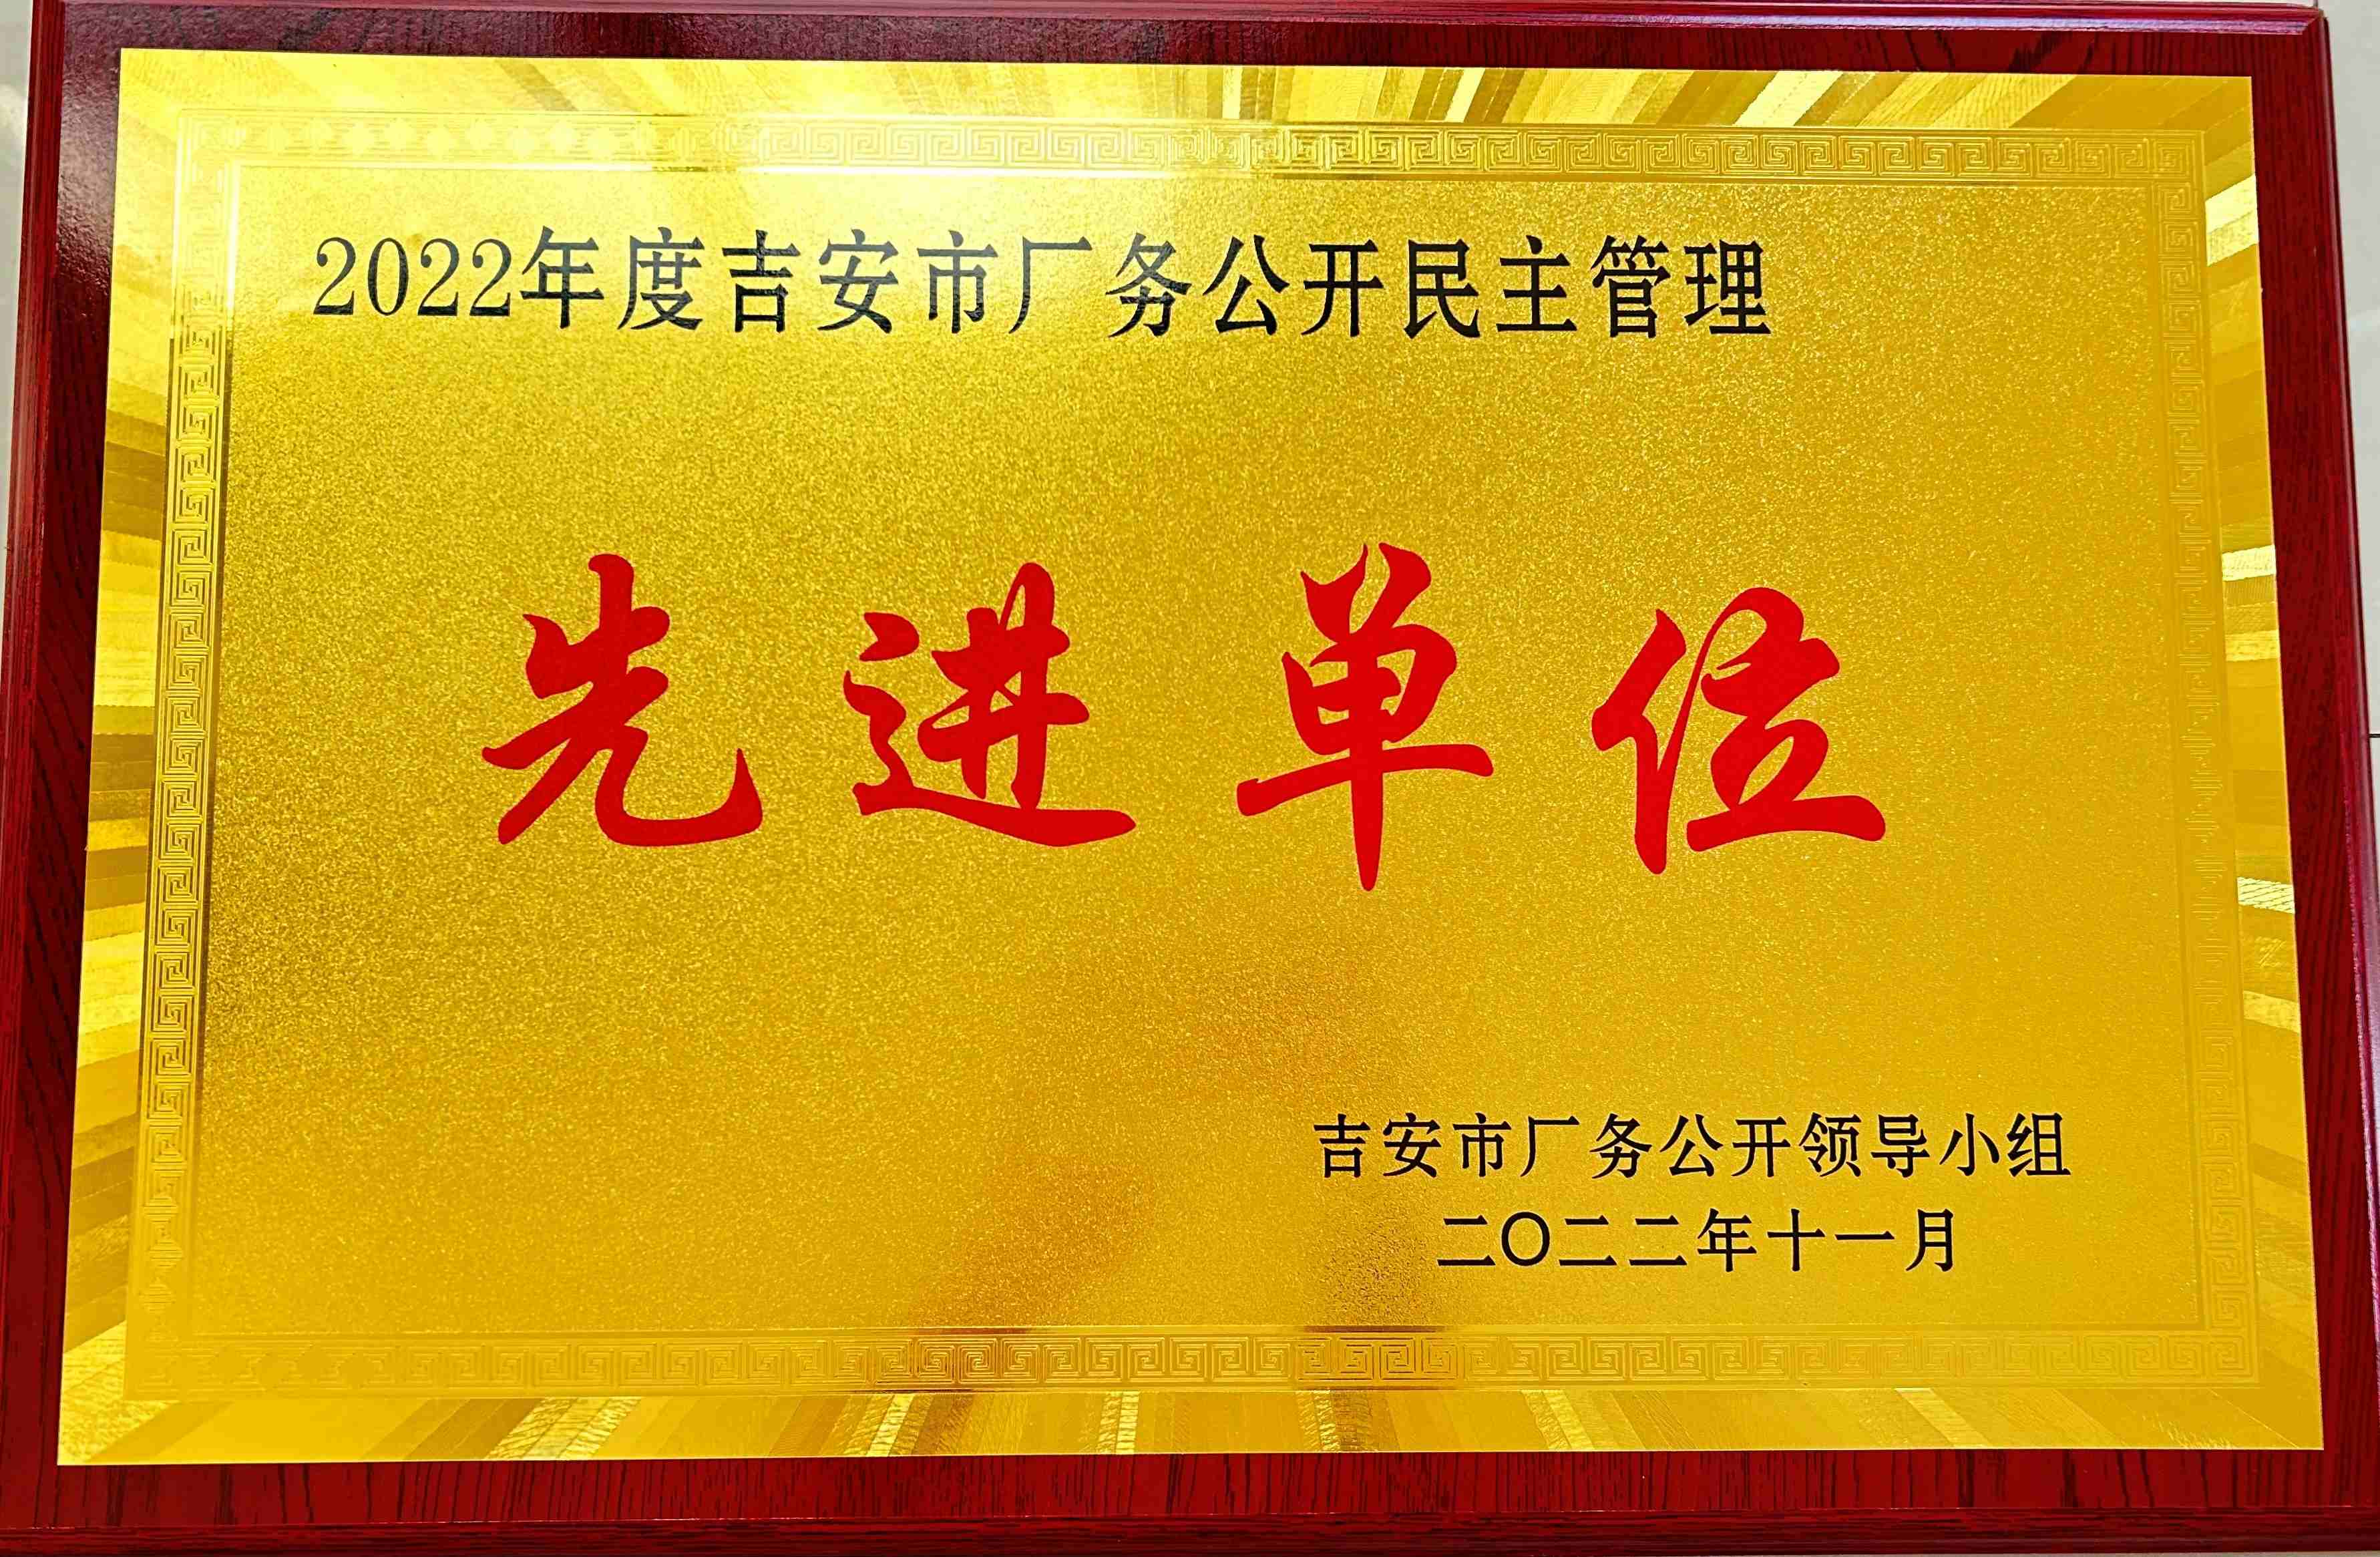 Jin'an Forest Industry Co., Ltd. was awarded 